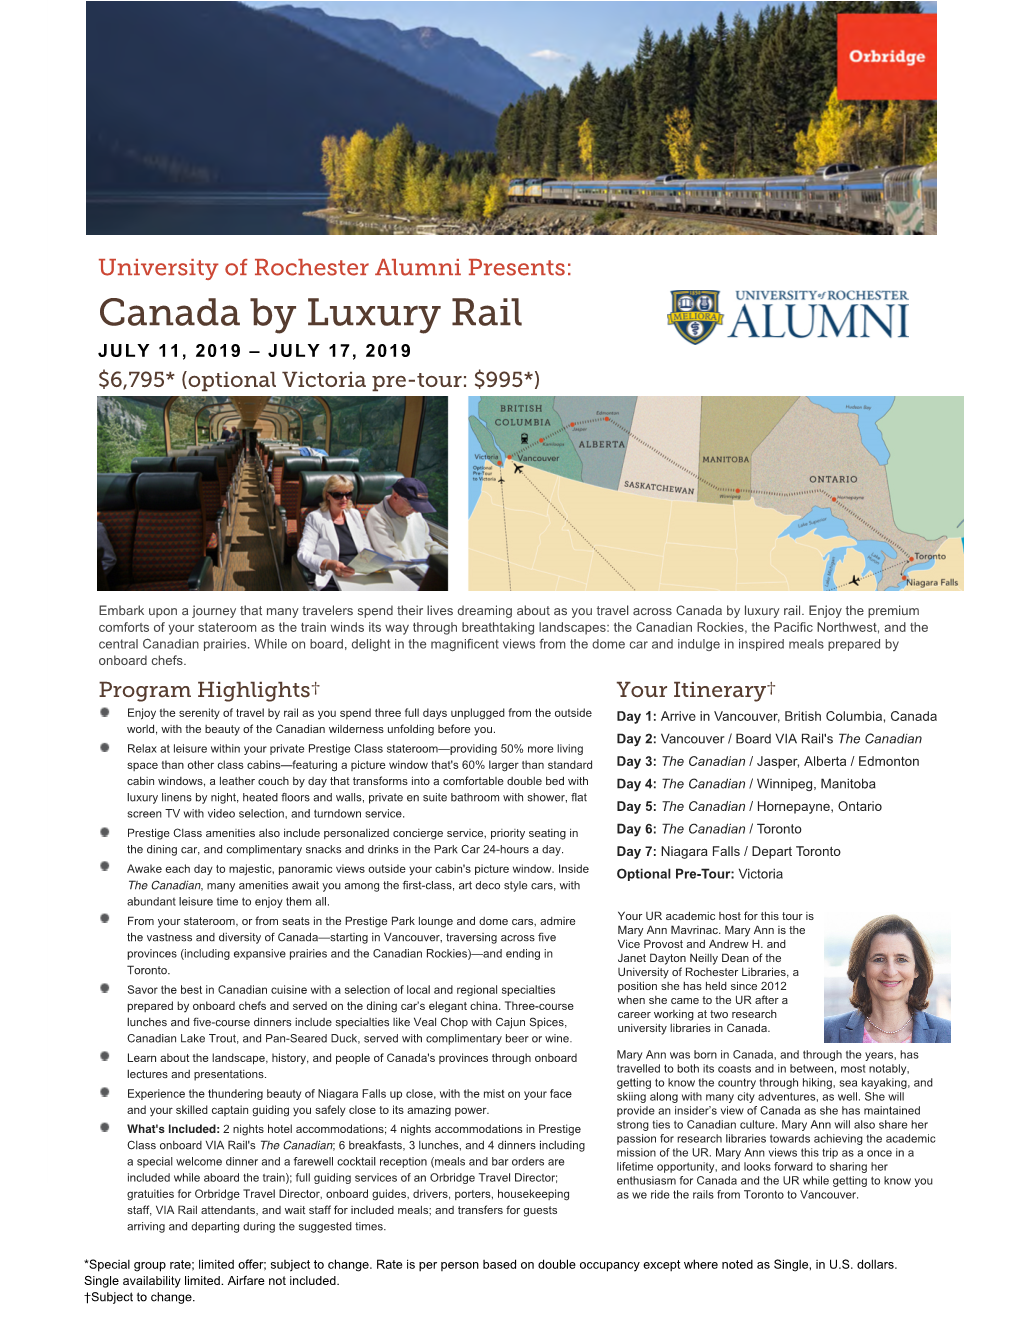 Canada Luxur Rail